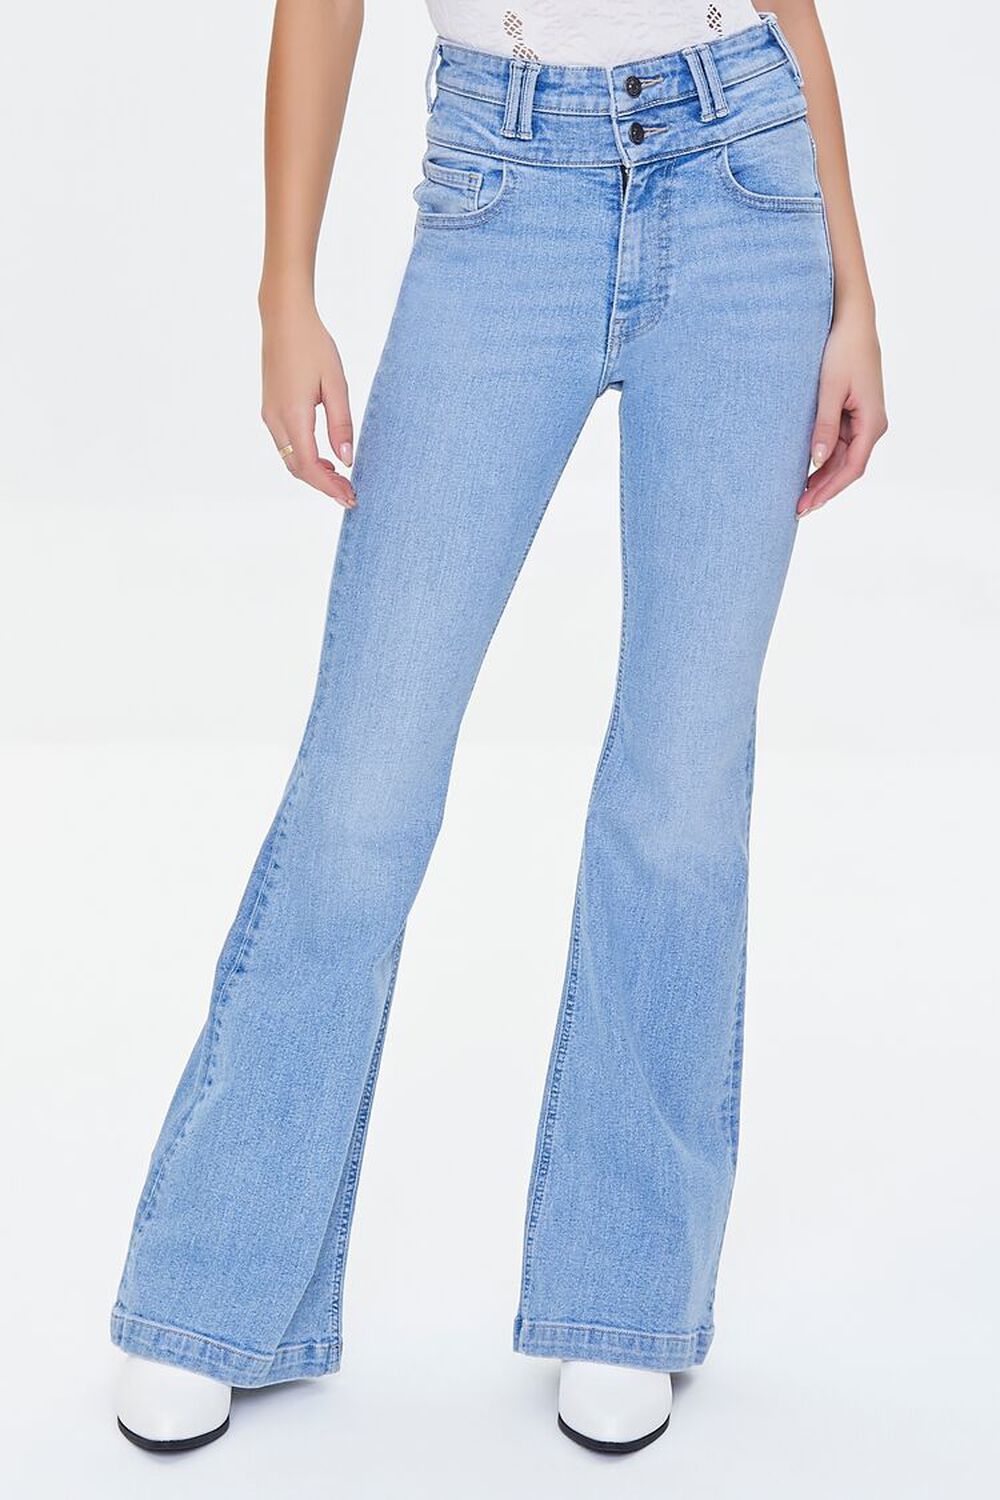 MEDIUM DENIM High-Rise Flare Jeans, image 1